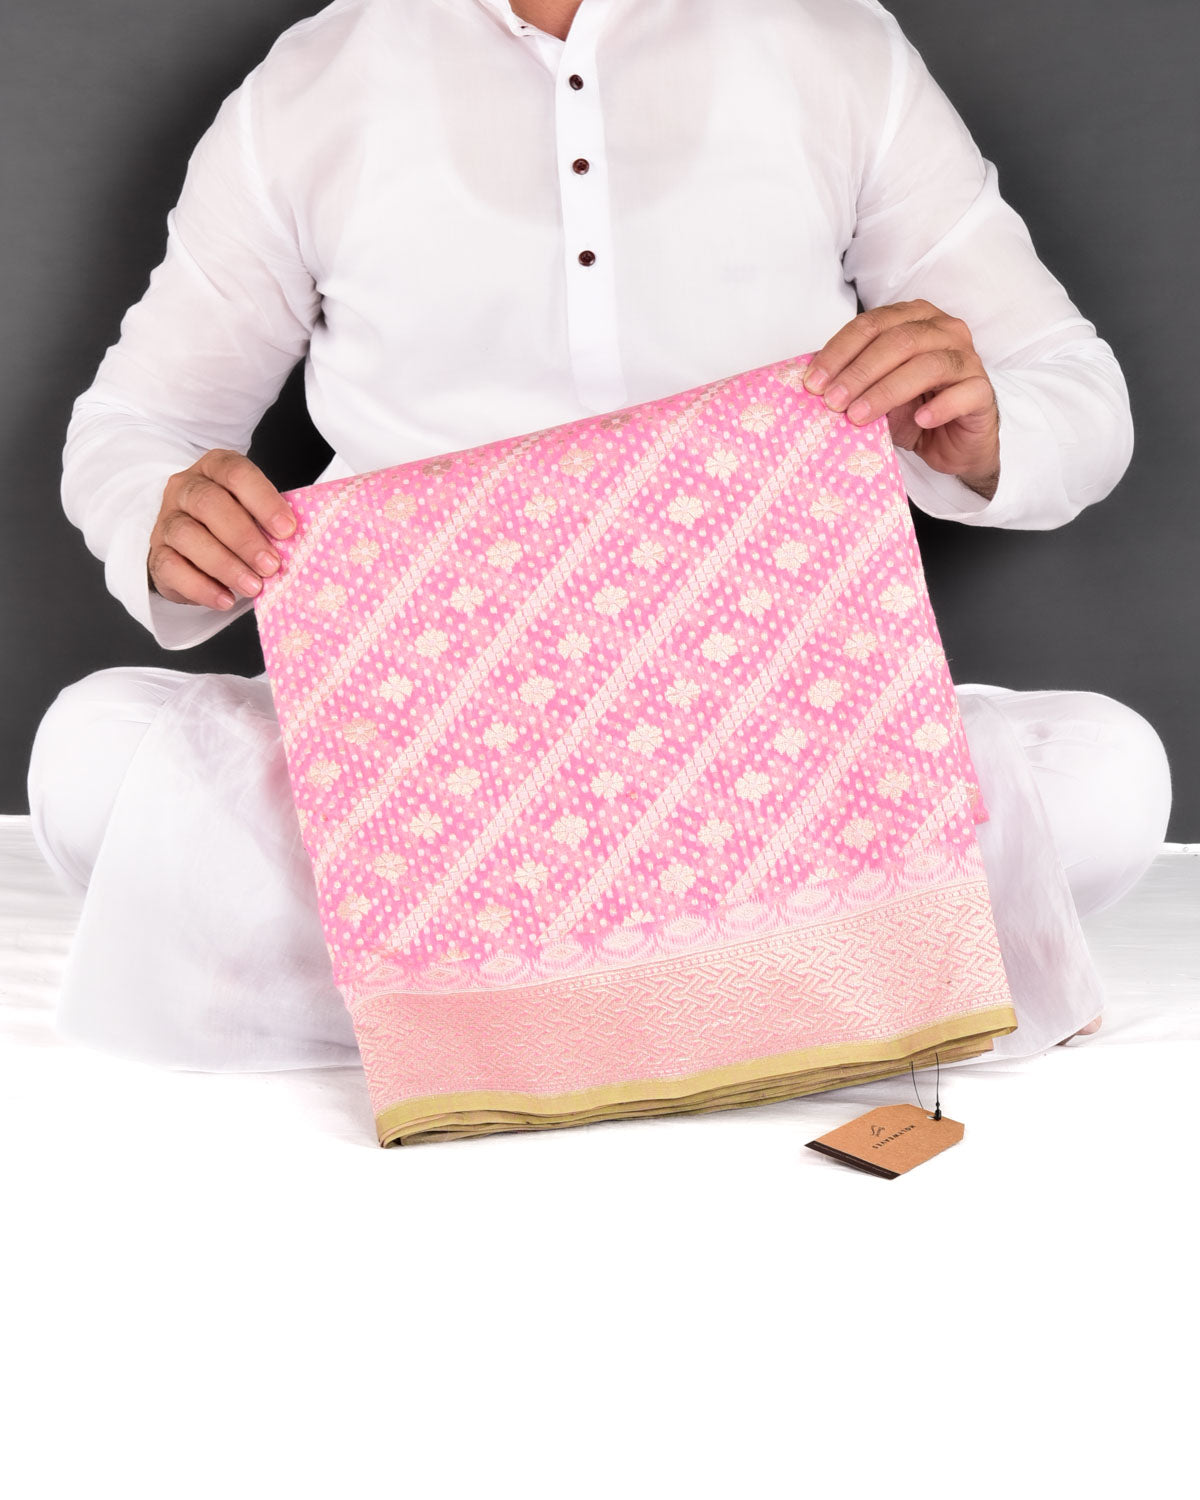 Pink Banarasi Gold Zari & White Resham Alfi Diagonal Buti Cutwork Brocade Handwoven Cotton Silk Saree - By HolyWeaves, Benares